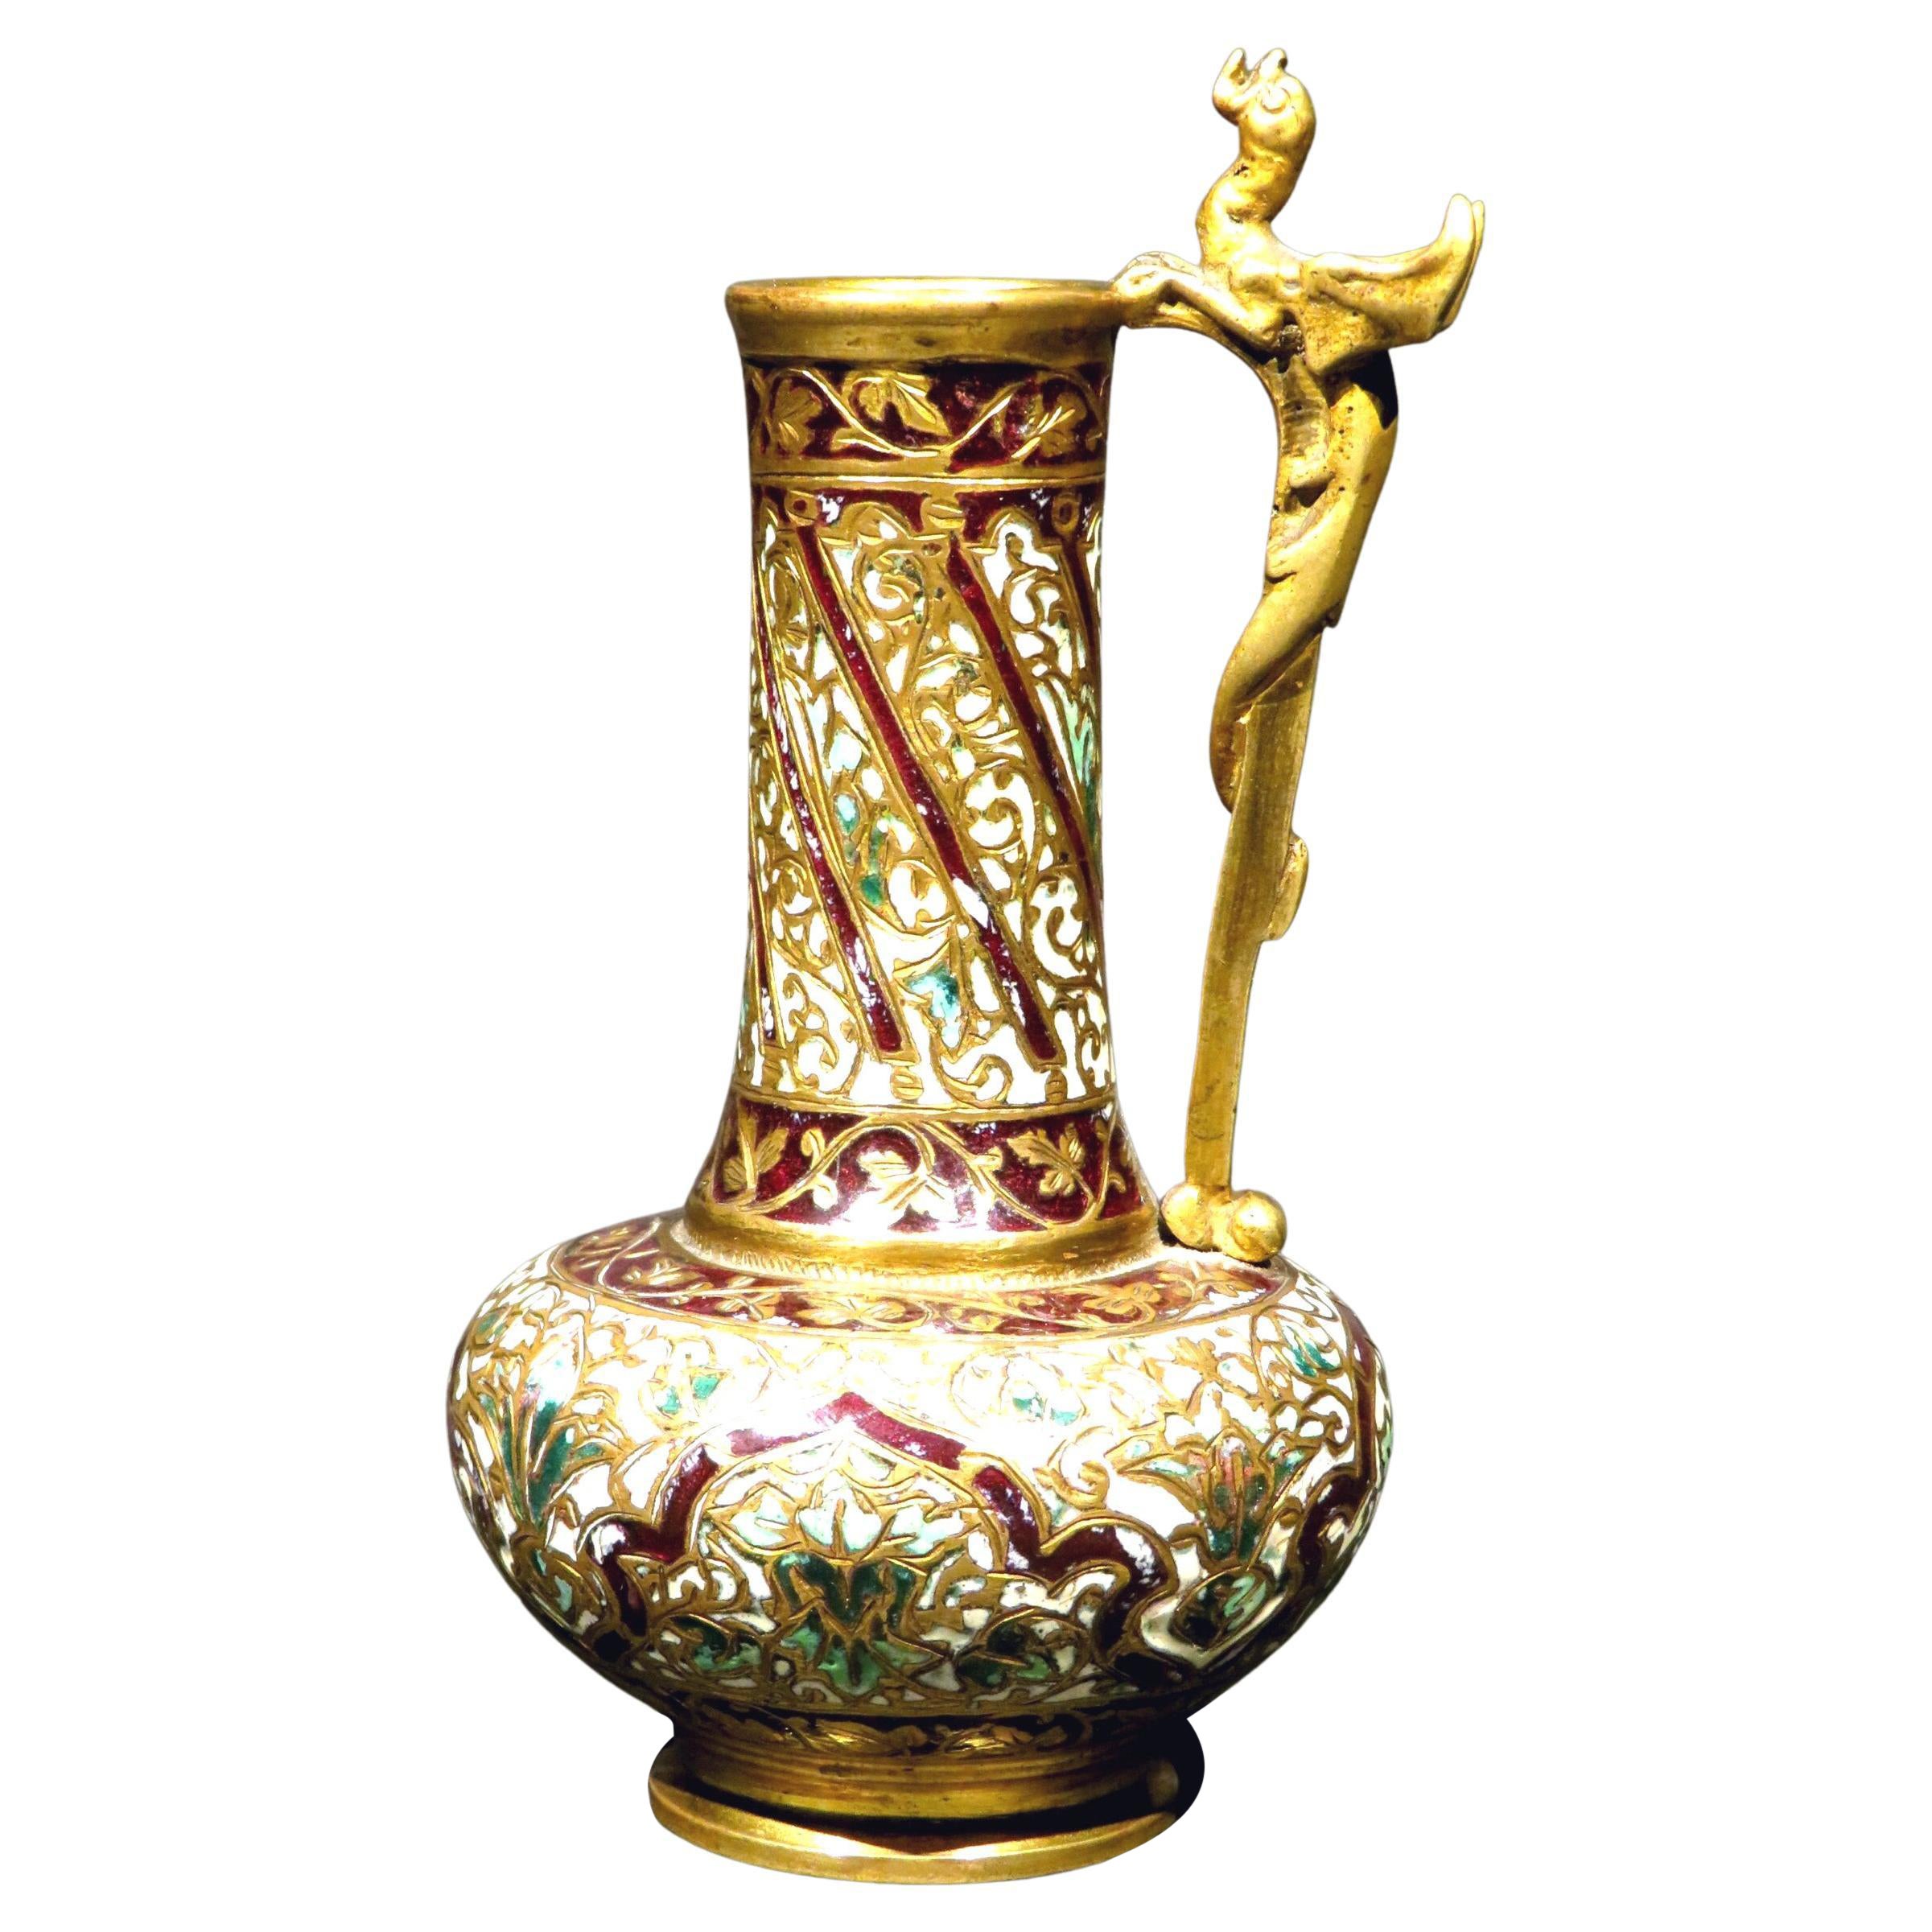 An Exceedingly Fine 19th C. Diminutive Champlevé Enamelled Gilt Bronze Bud Vase